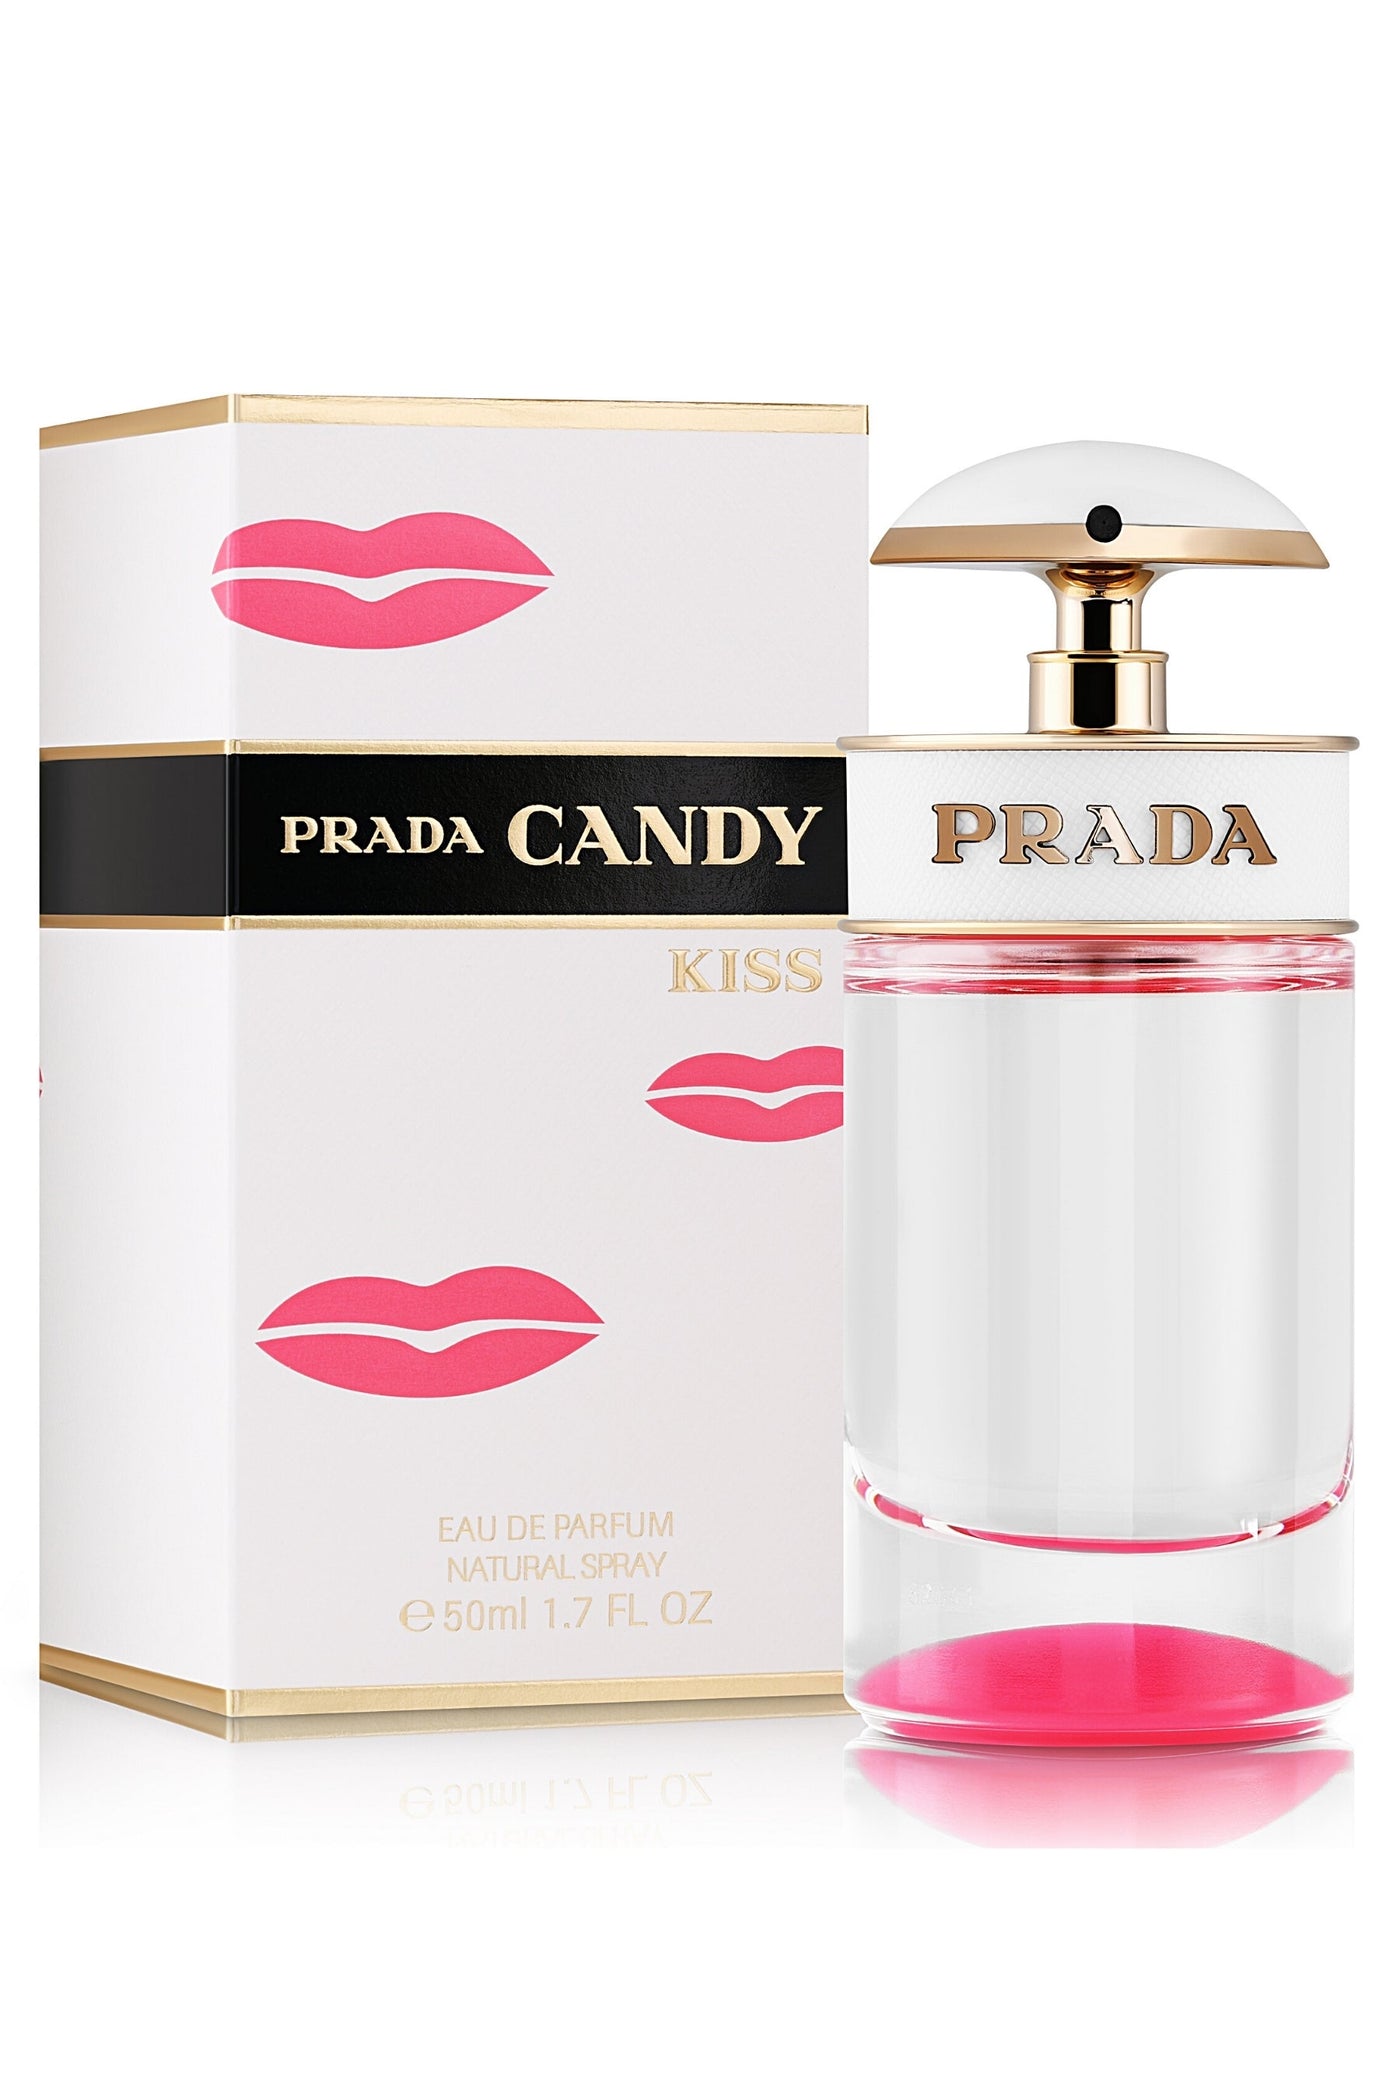 Prada Candy Kiss For Women Eau De Parfum 50Ml